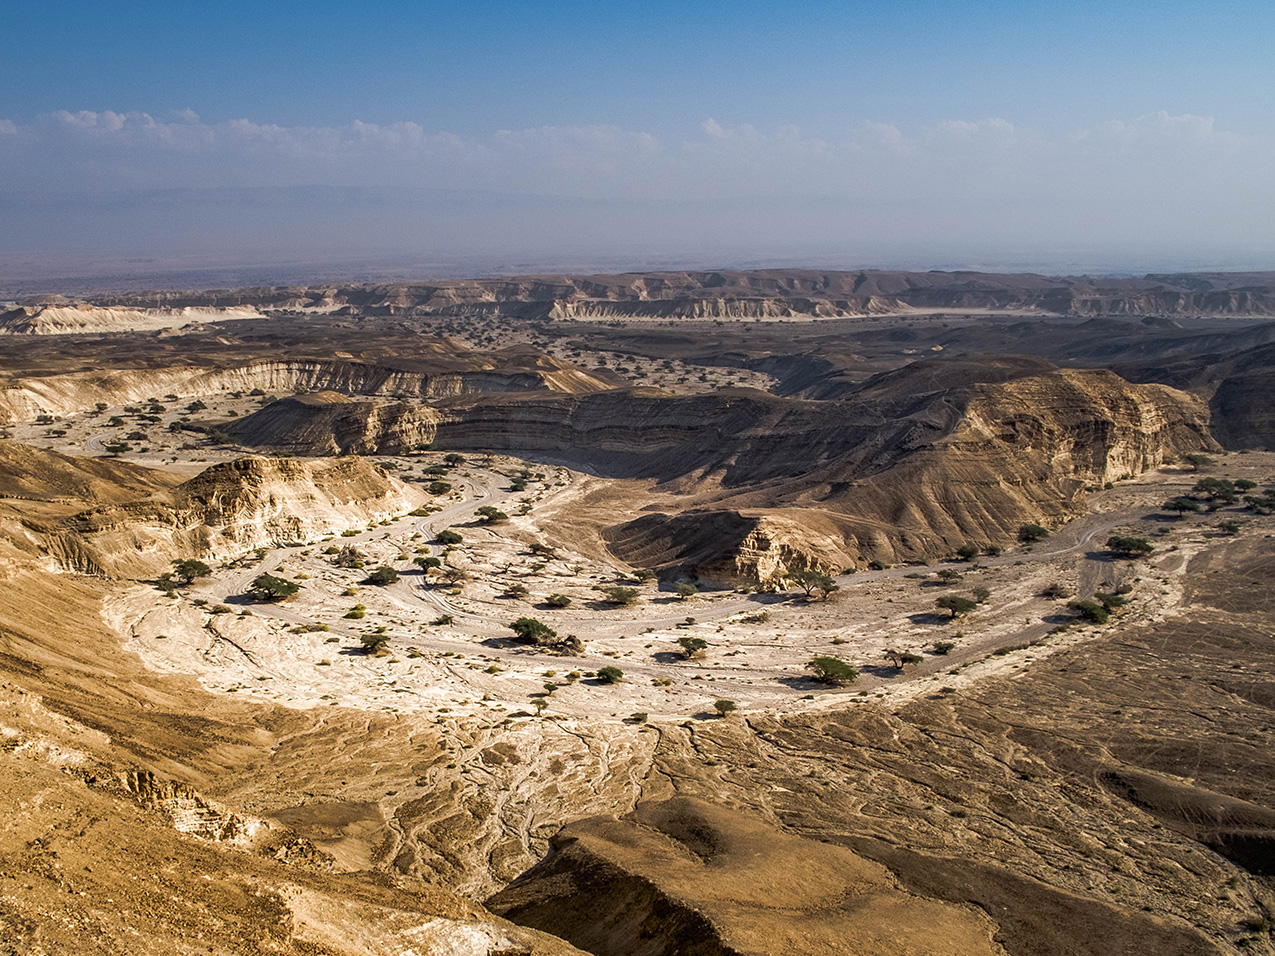 dry desert streambeds converge in the Negev desert, Israel